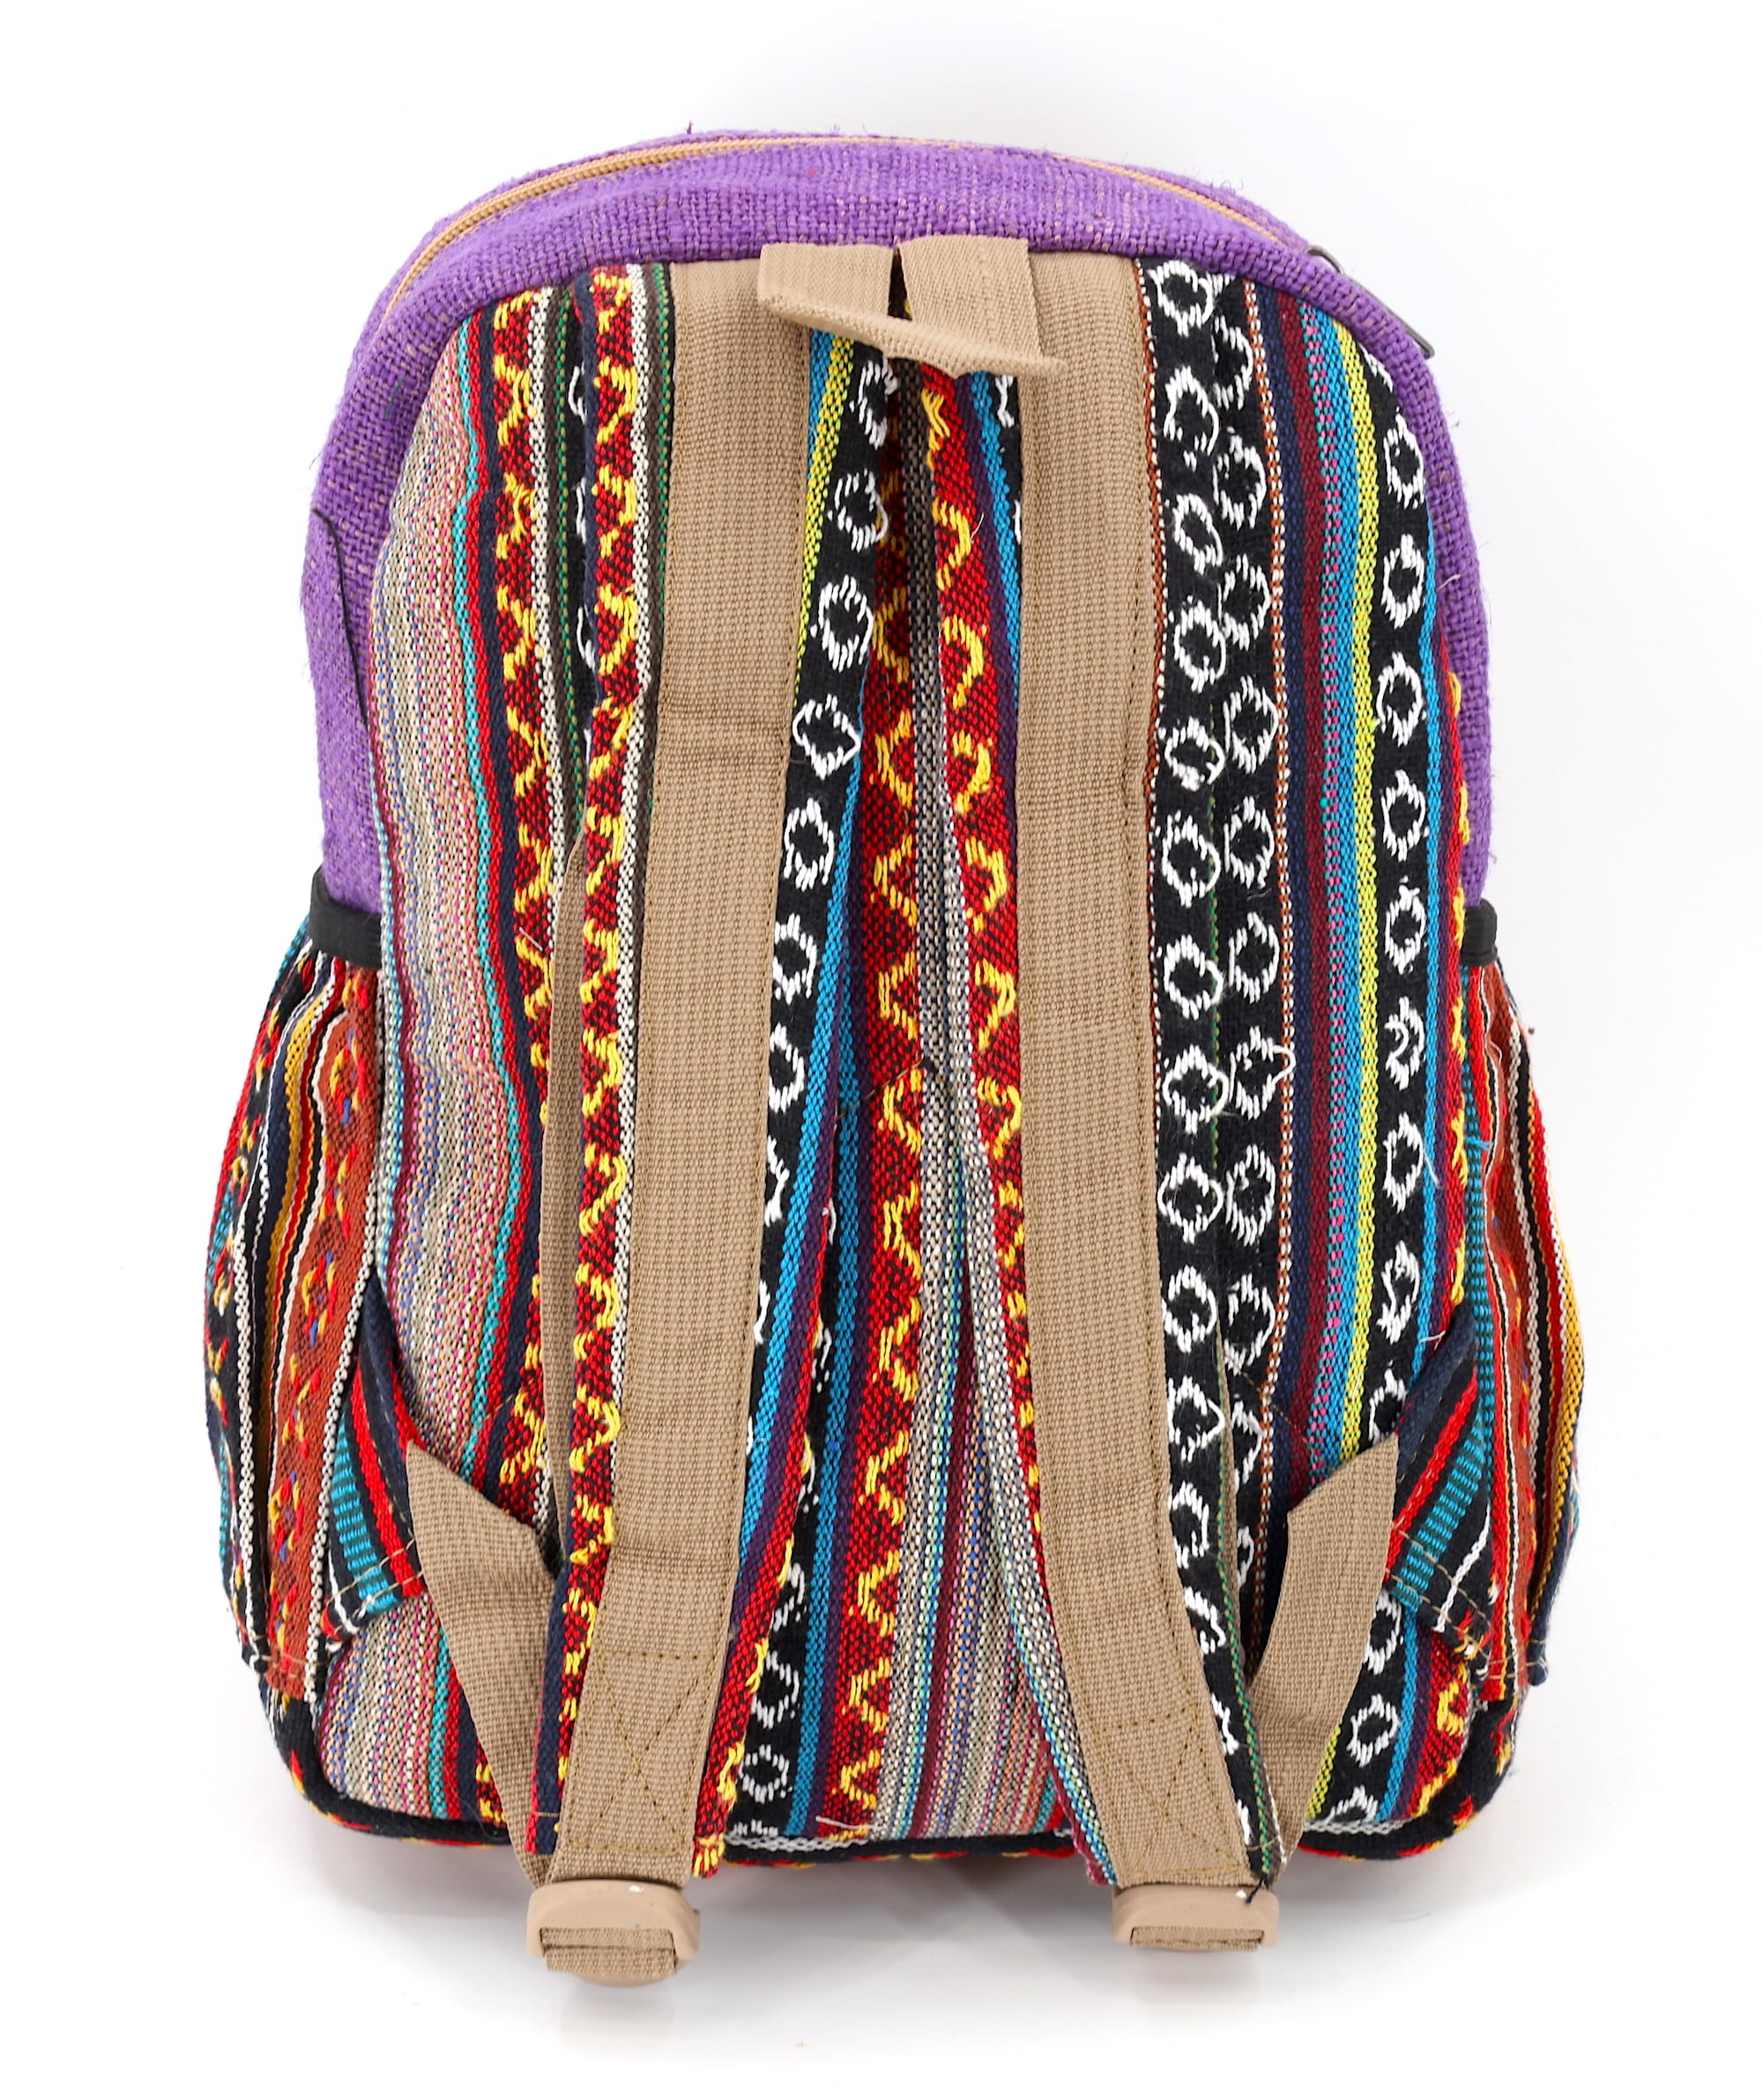 Unique design Himalaya Hemp Tie Dye Hippie Backpack Festival Backpack Hiking Backpack FAIR TRADE Handmade with Love. (PURPLE)